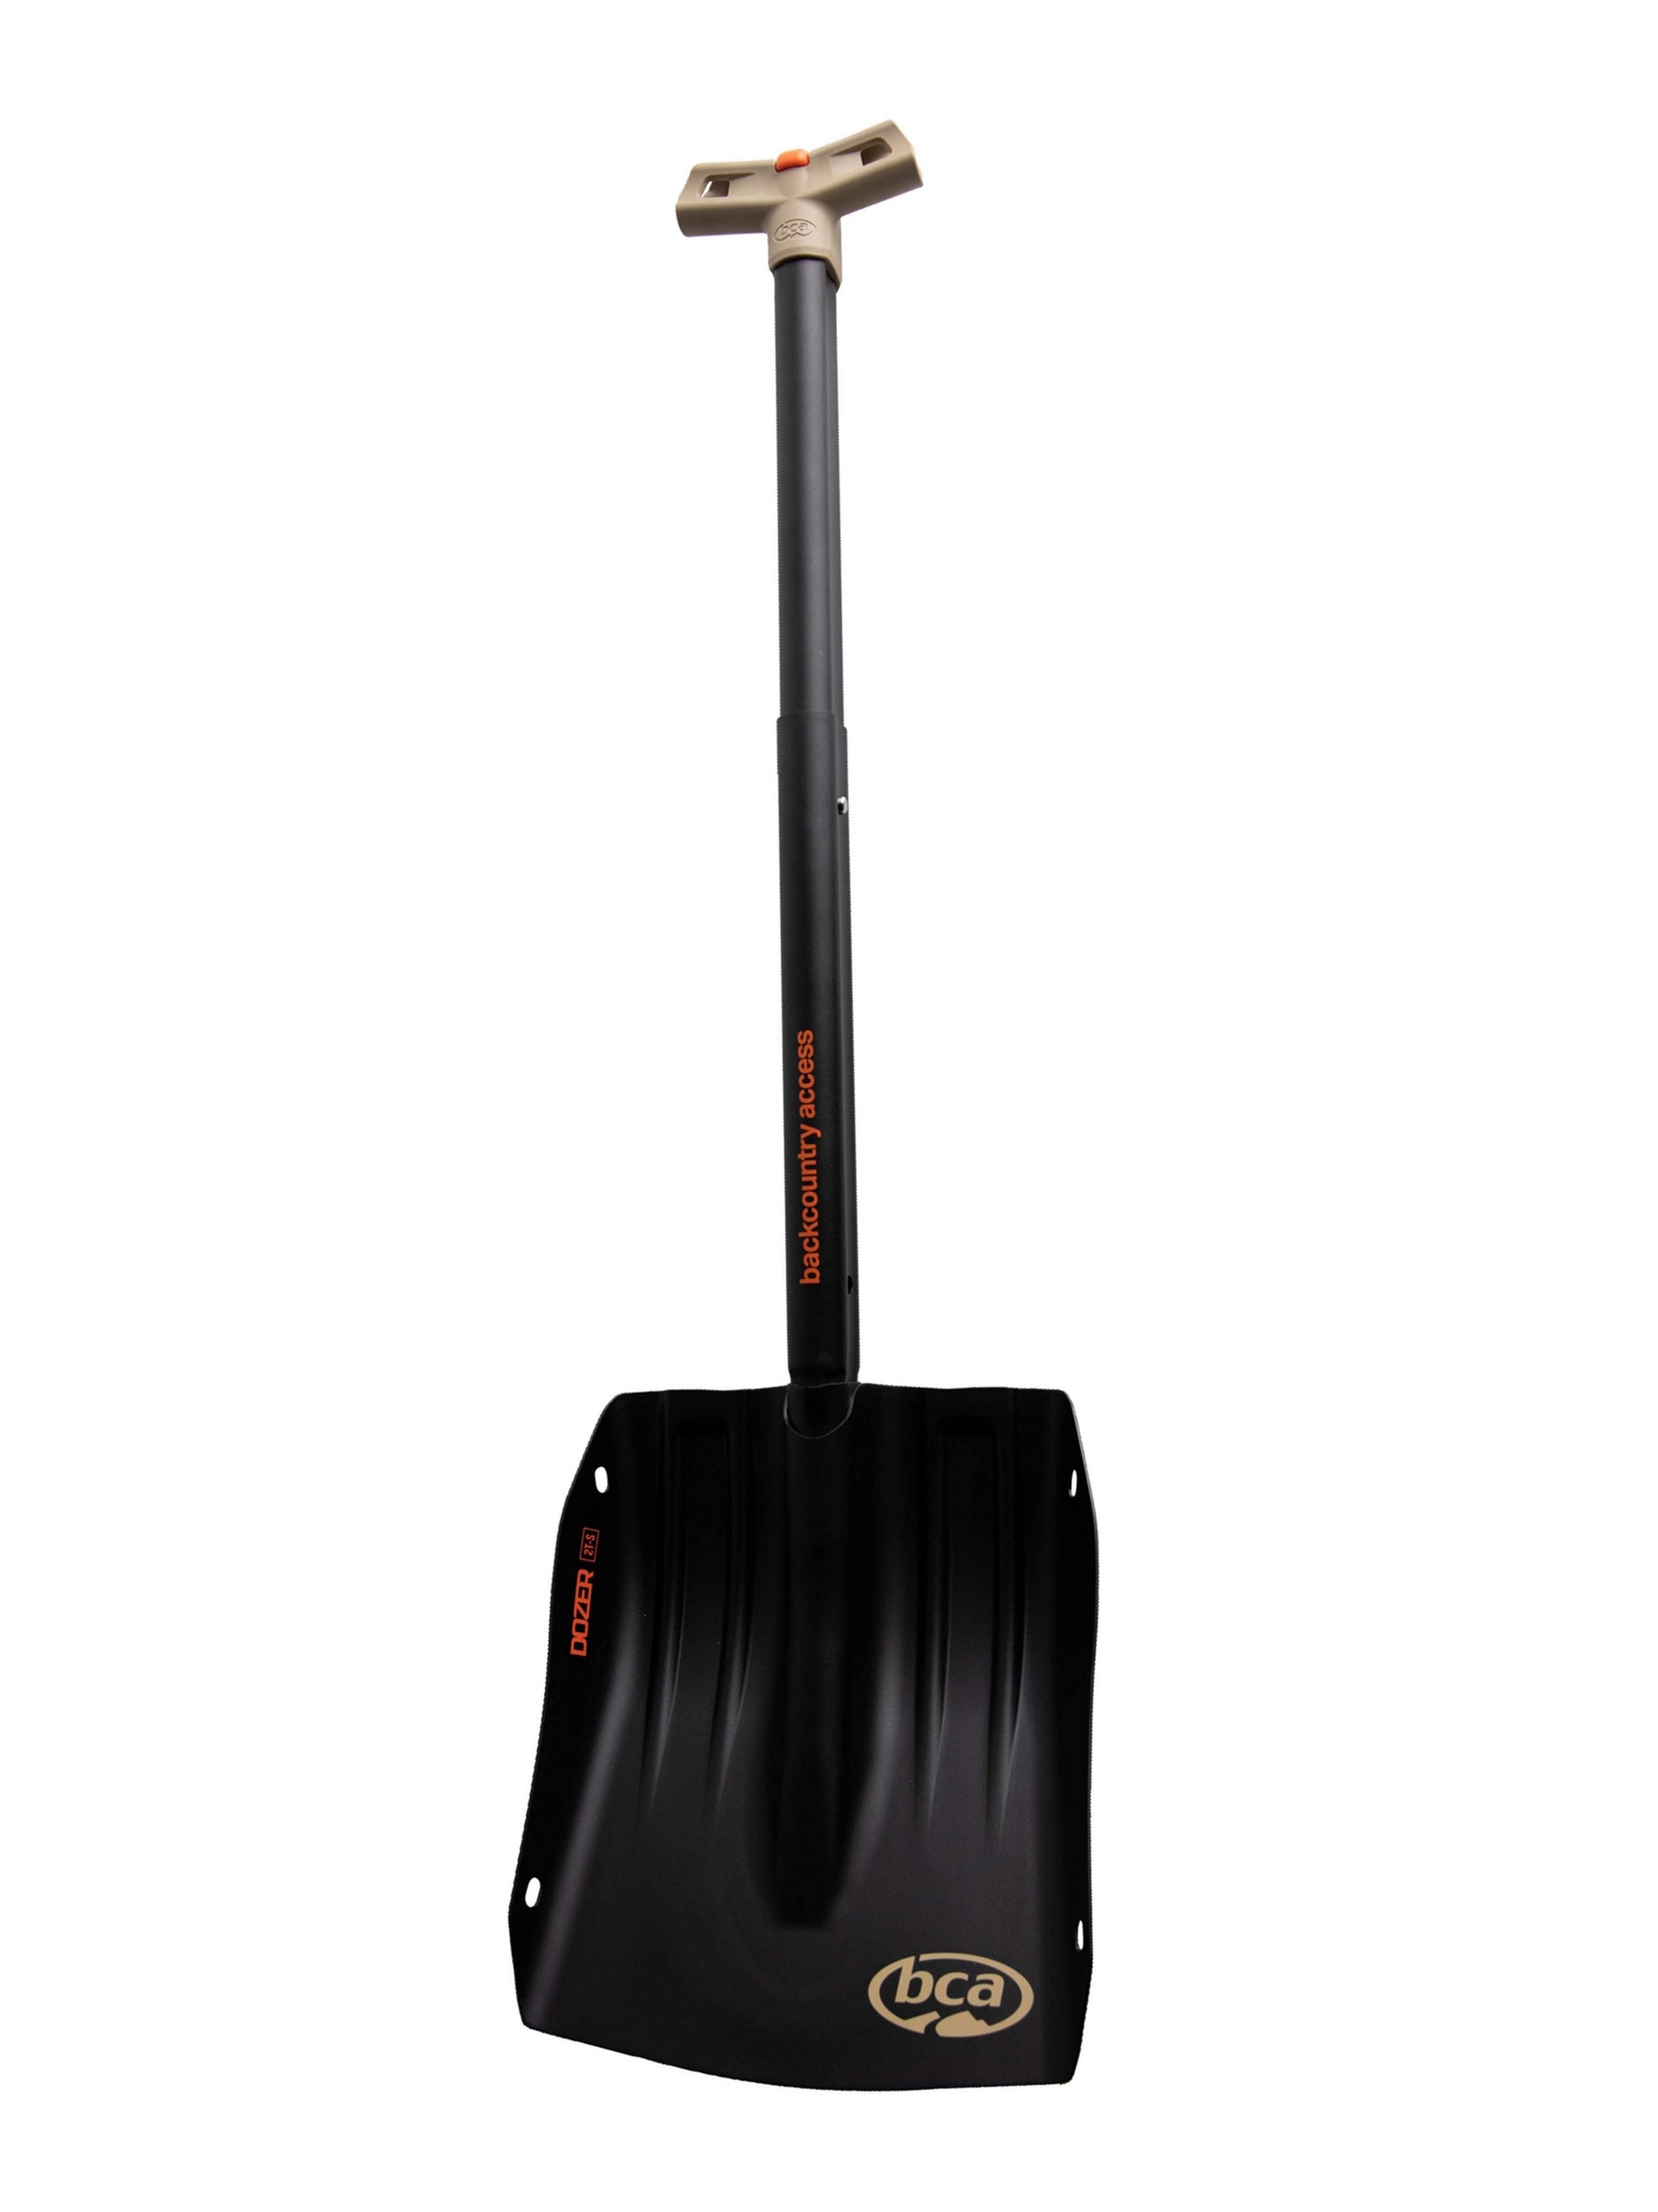 BCA Dozer 2T-S Avalanche Shovel Black Backcountry Shovels BCA - Backcountry Access 